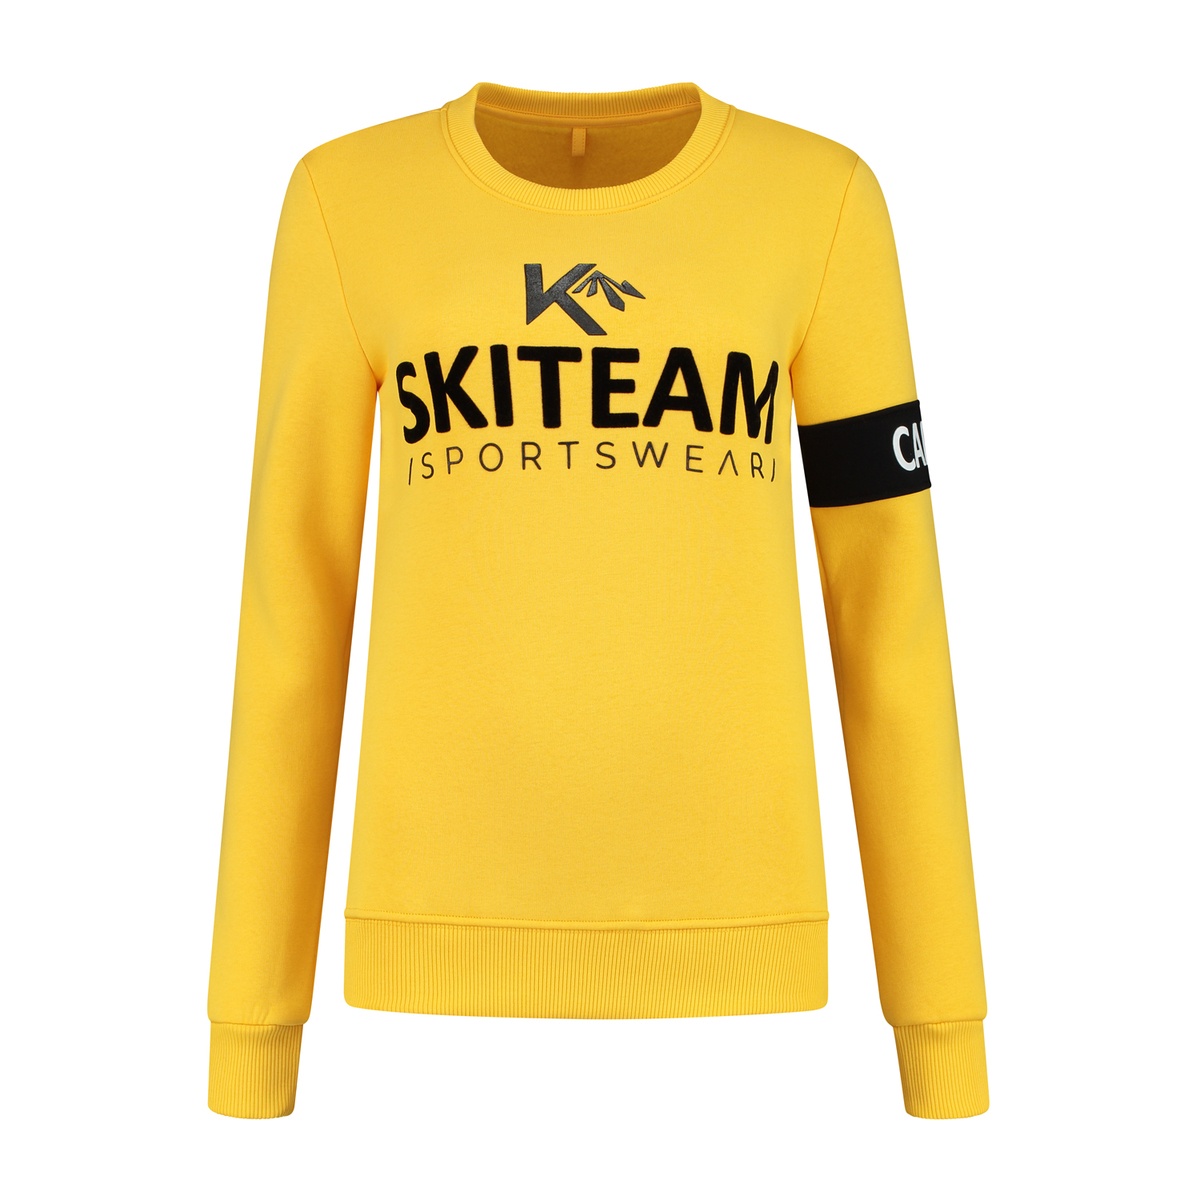 desinfecteren archief fee Sweater Skiteam - Kou Sportswear